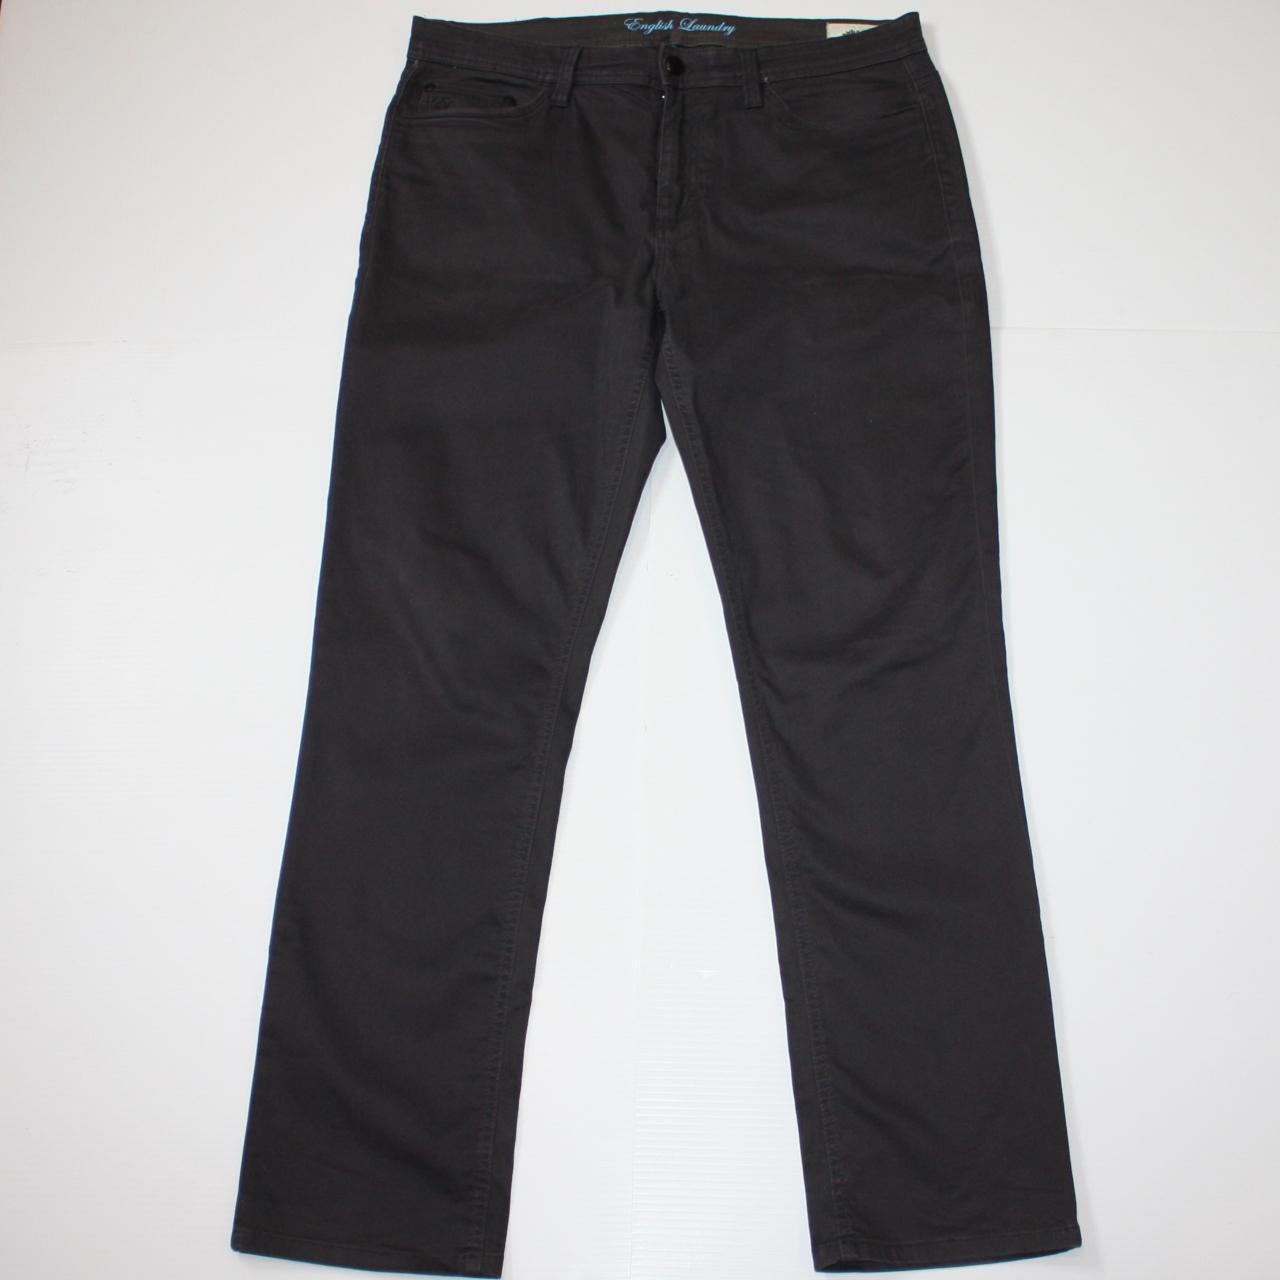 English Laundry Men's Dark Color Casual Pants size... - Depop